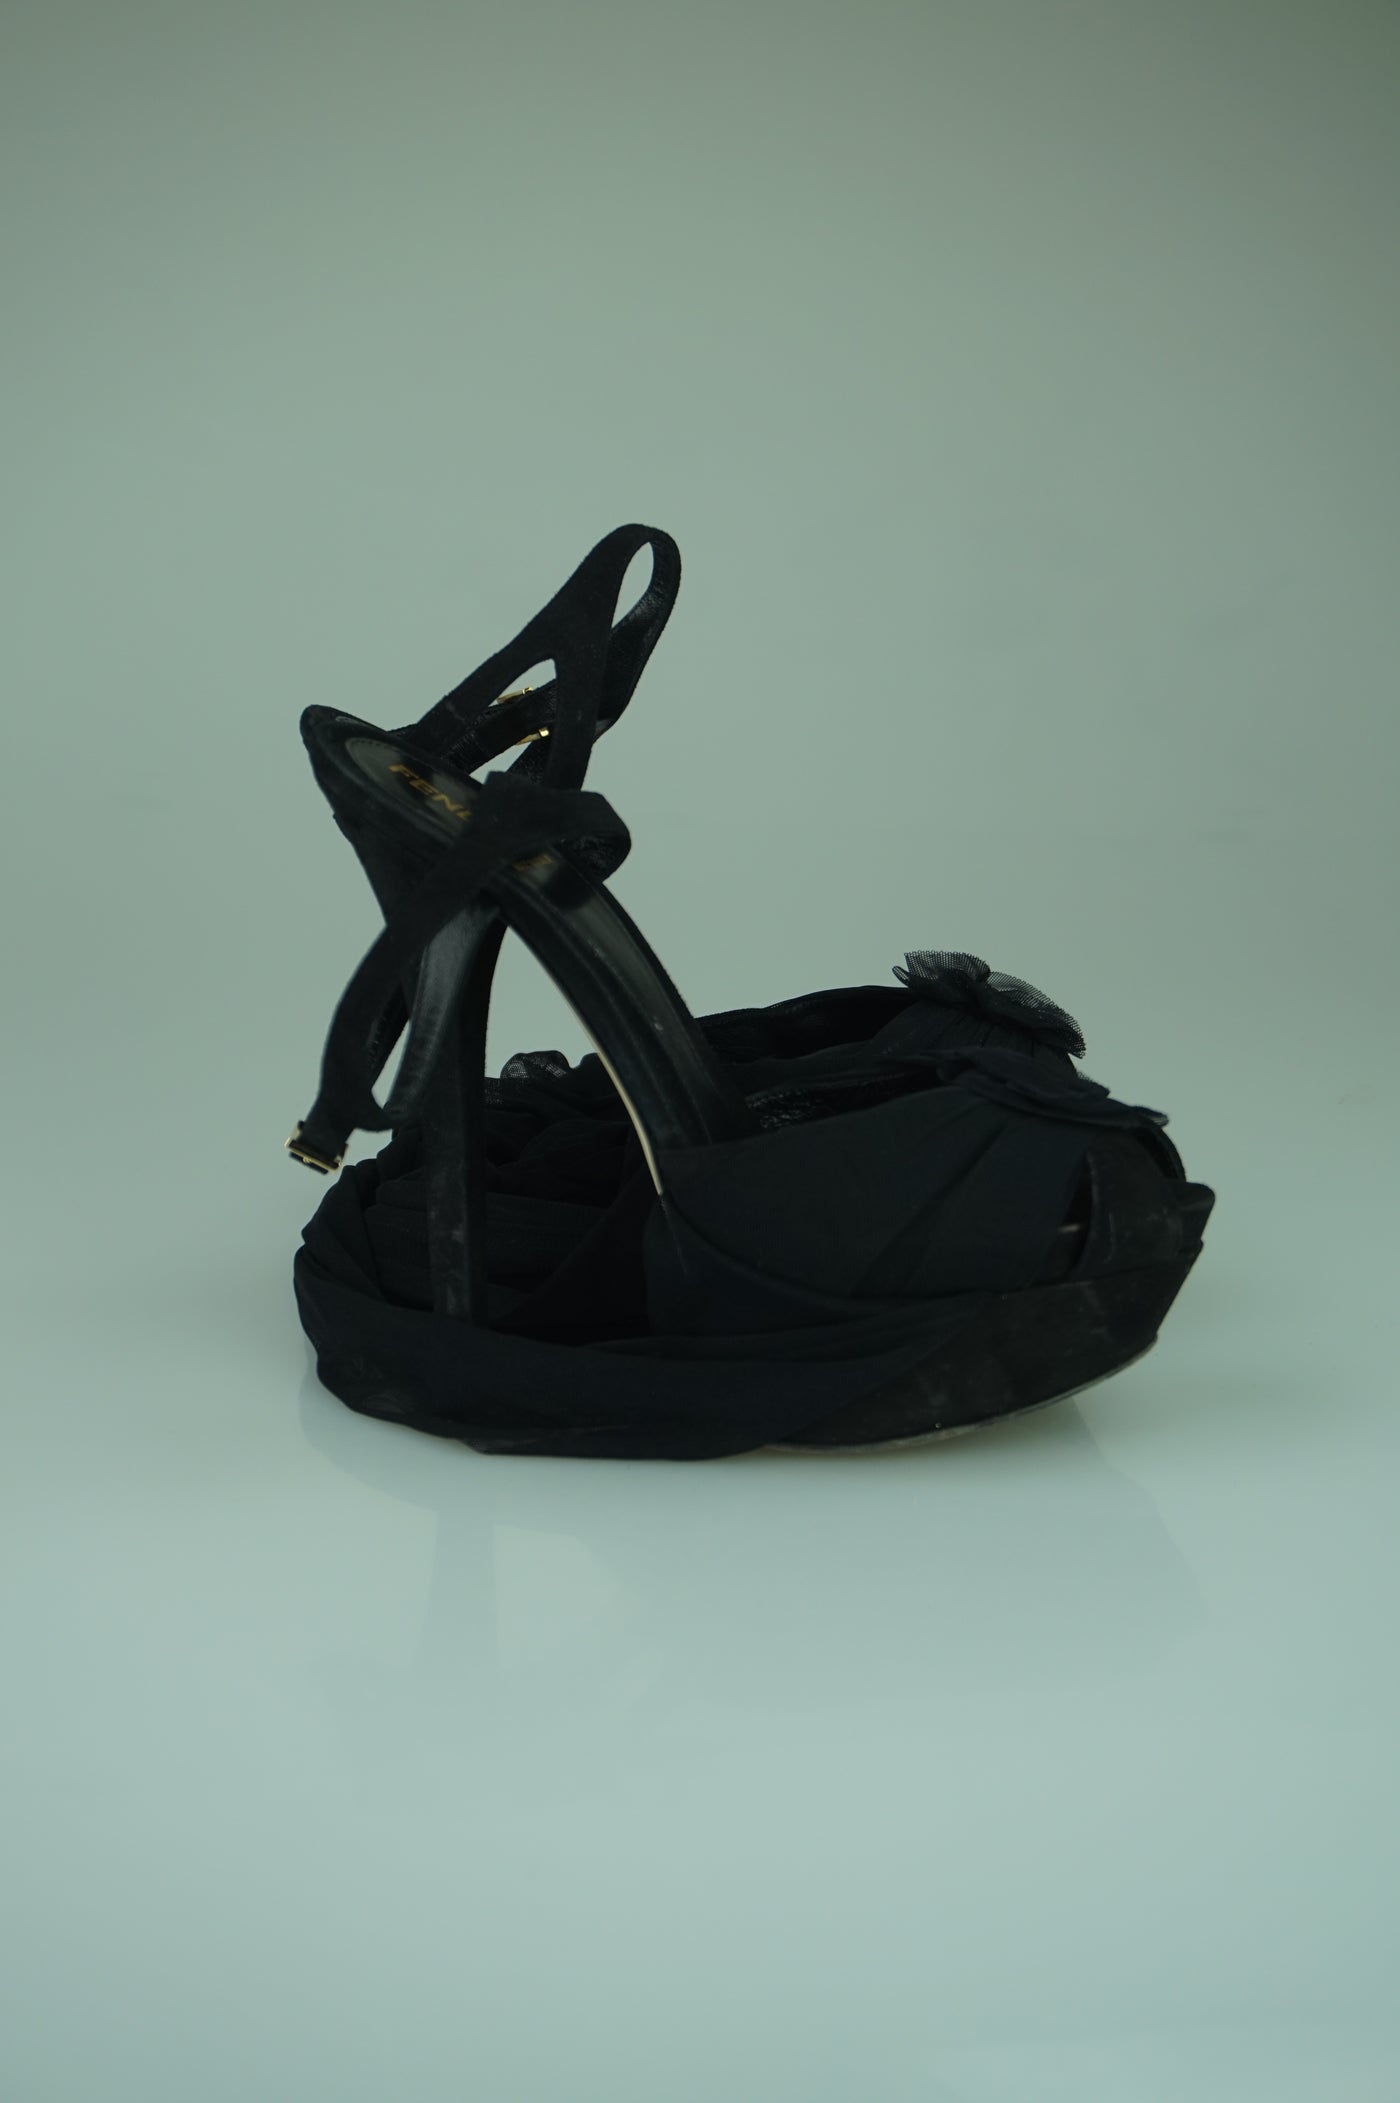 Tied-Up Black Platform Heels